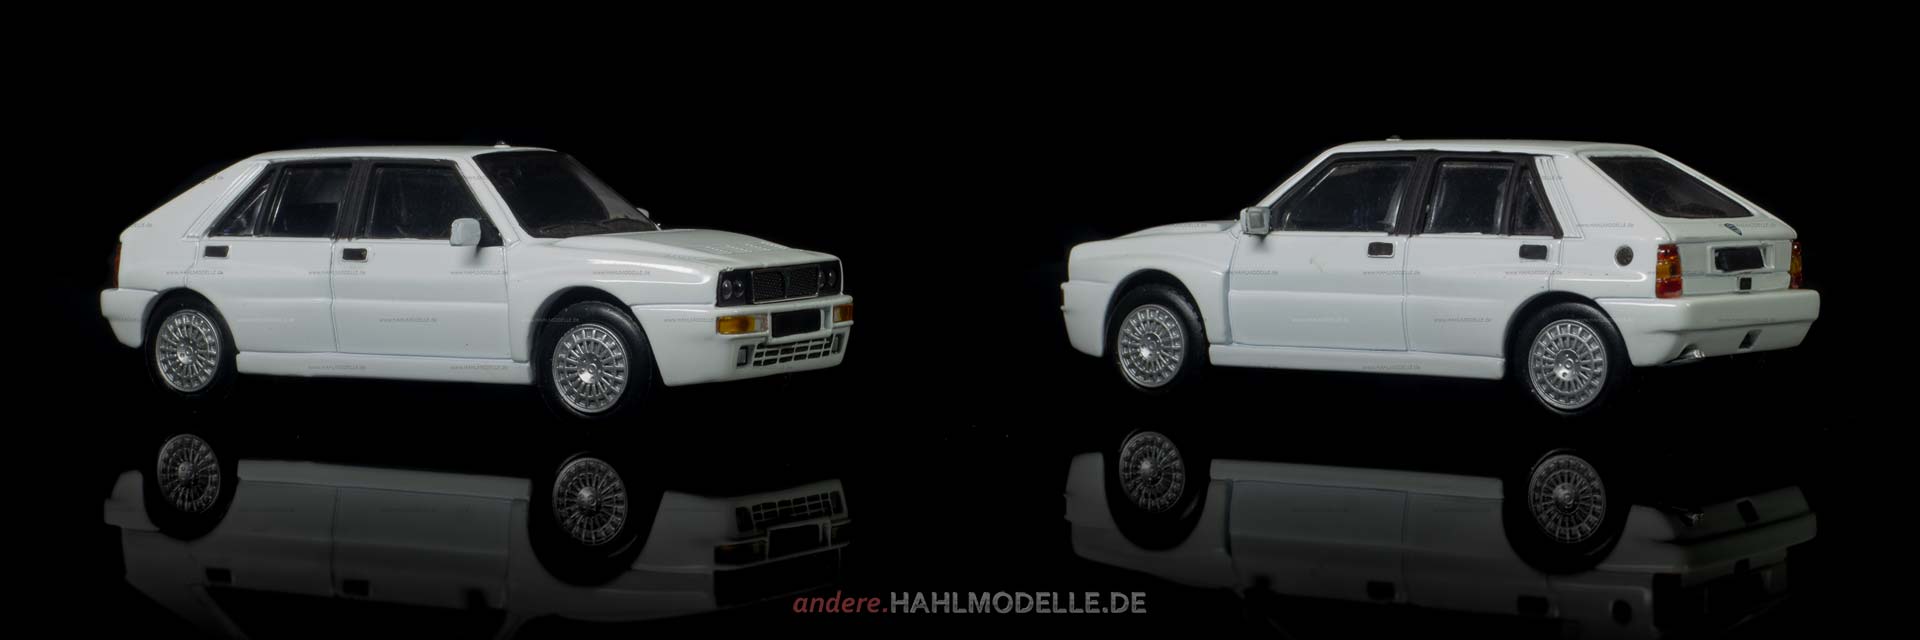 Lancia Delta HF Integrale | Limousine | Ixo (Del Prado Car Collection) | 1:43 | www.andere.hahlmodelle.de